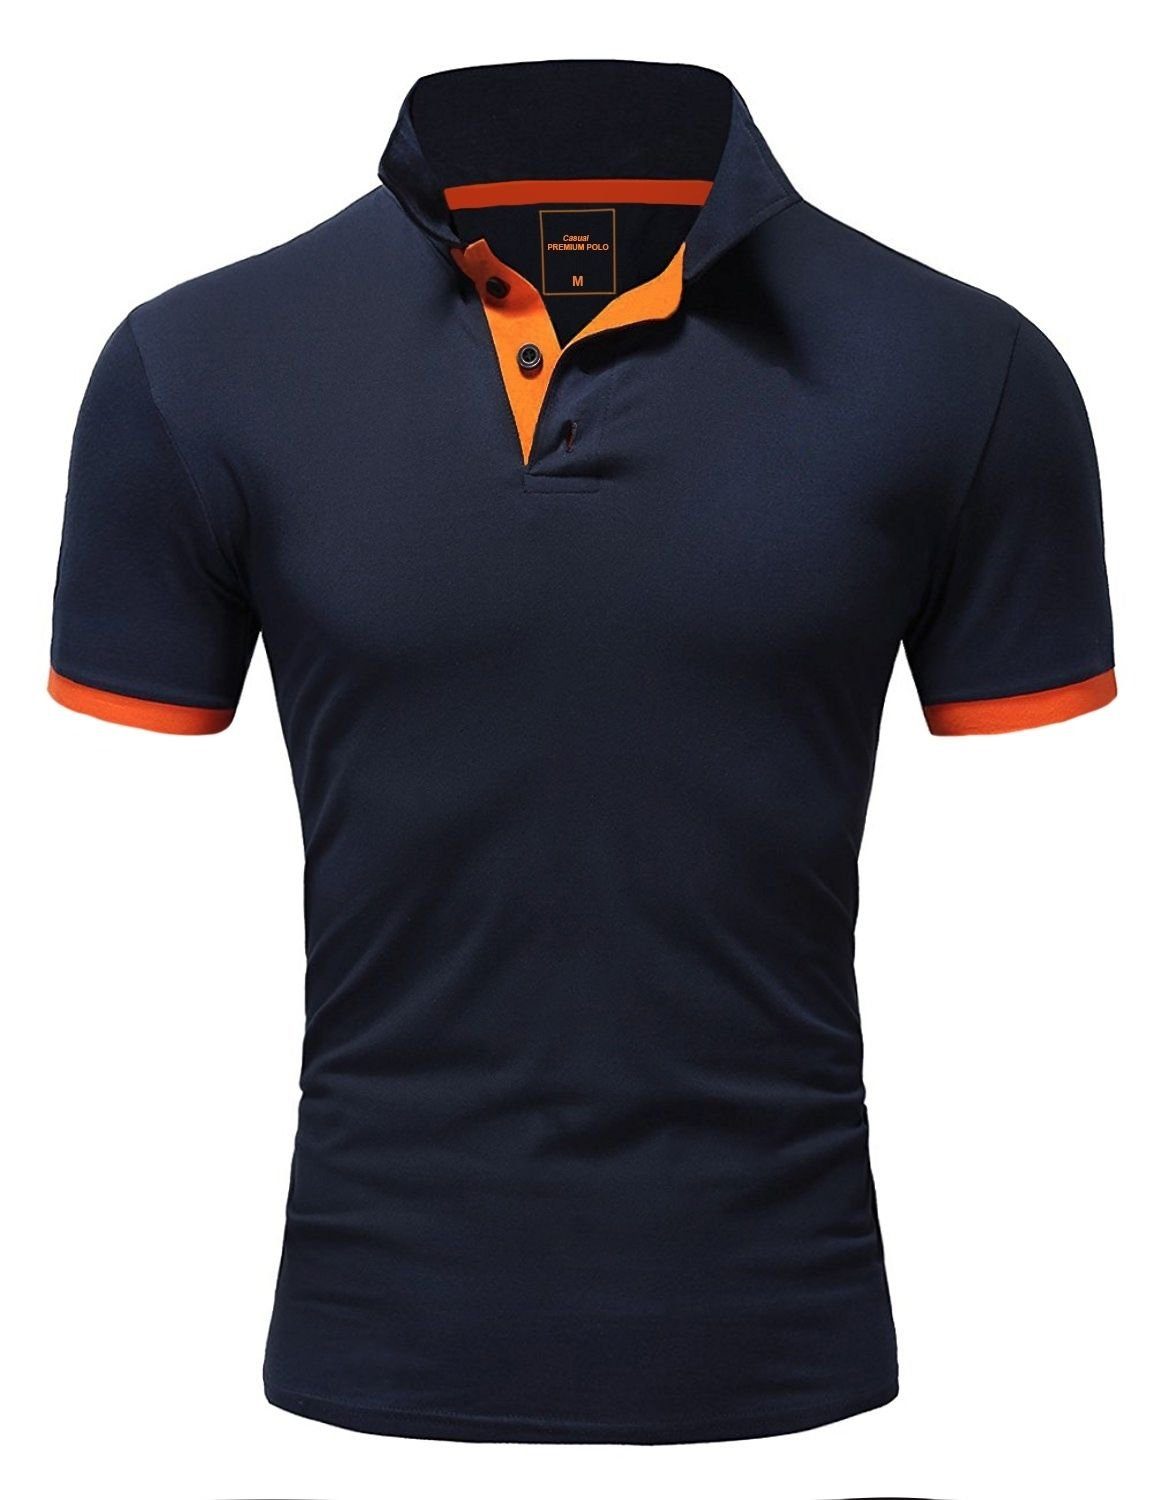 behype Poloshirt BASE mit kontrastfarbigen Details dunkelblau-orange